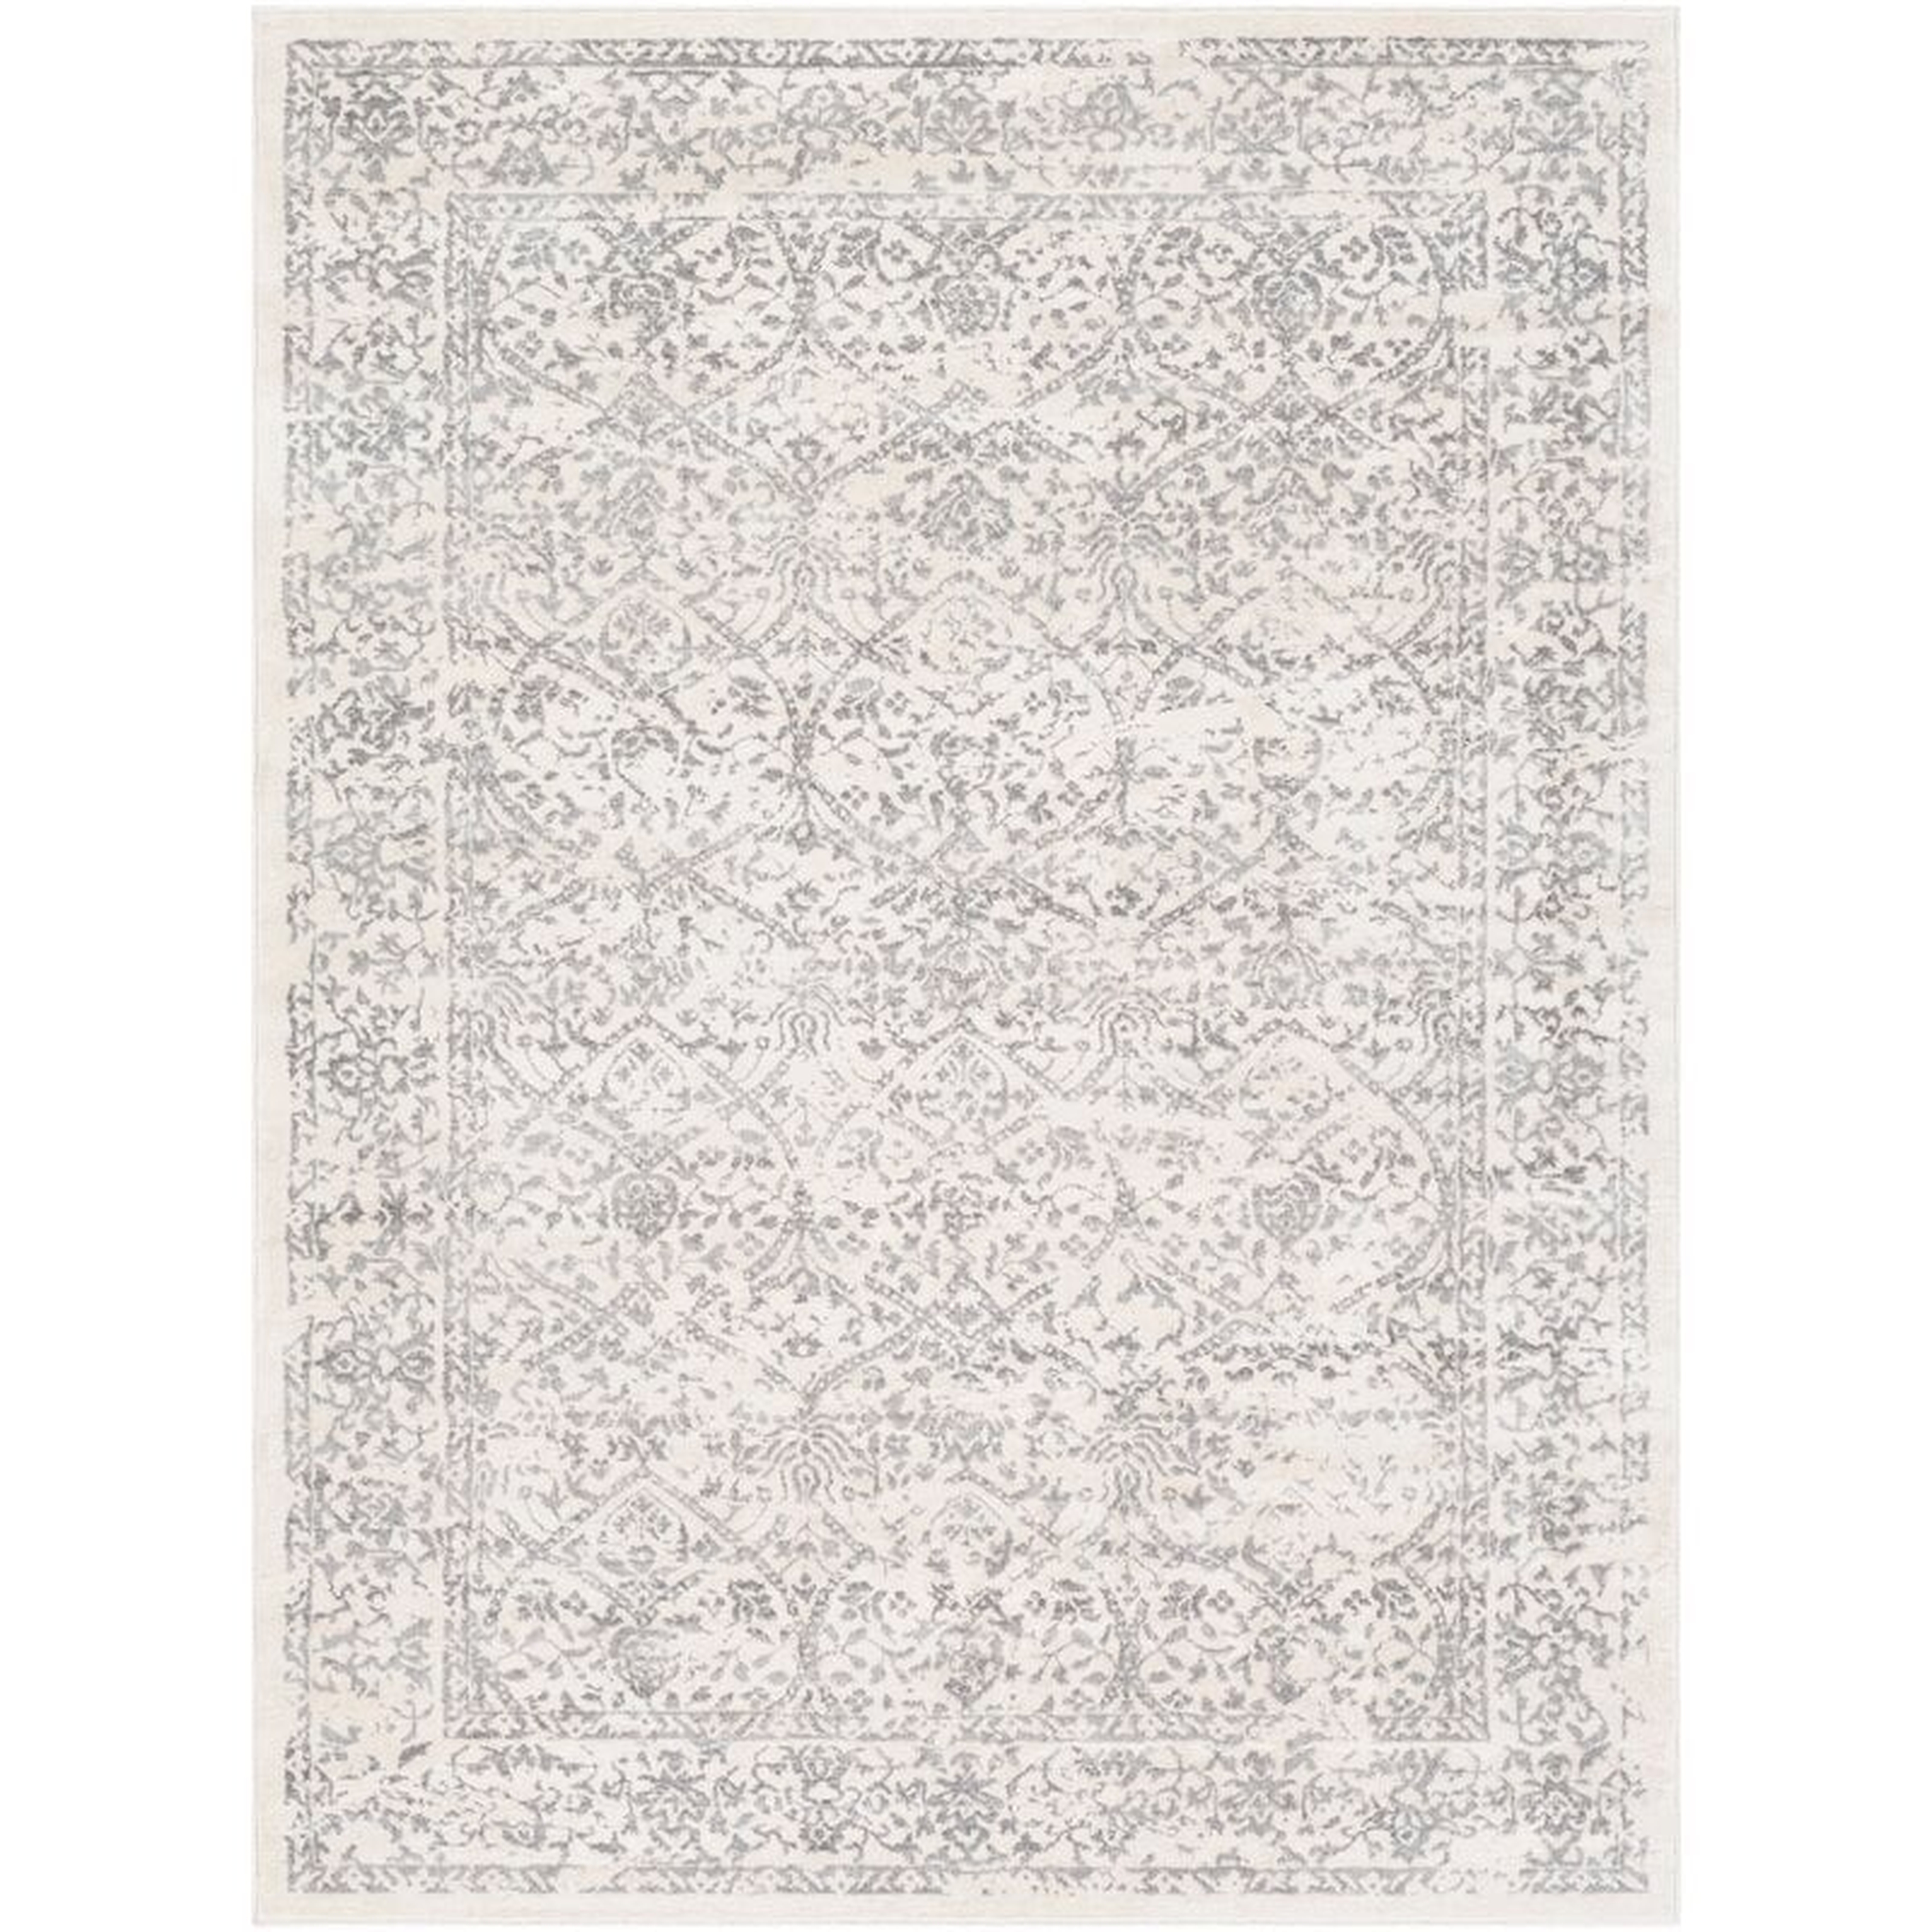 Desoto Oriental Area Rug, Gray & Ivory, 7'10" x 10' - Wayfair